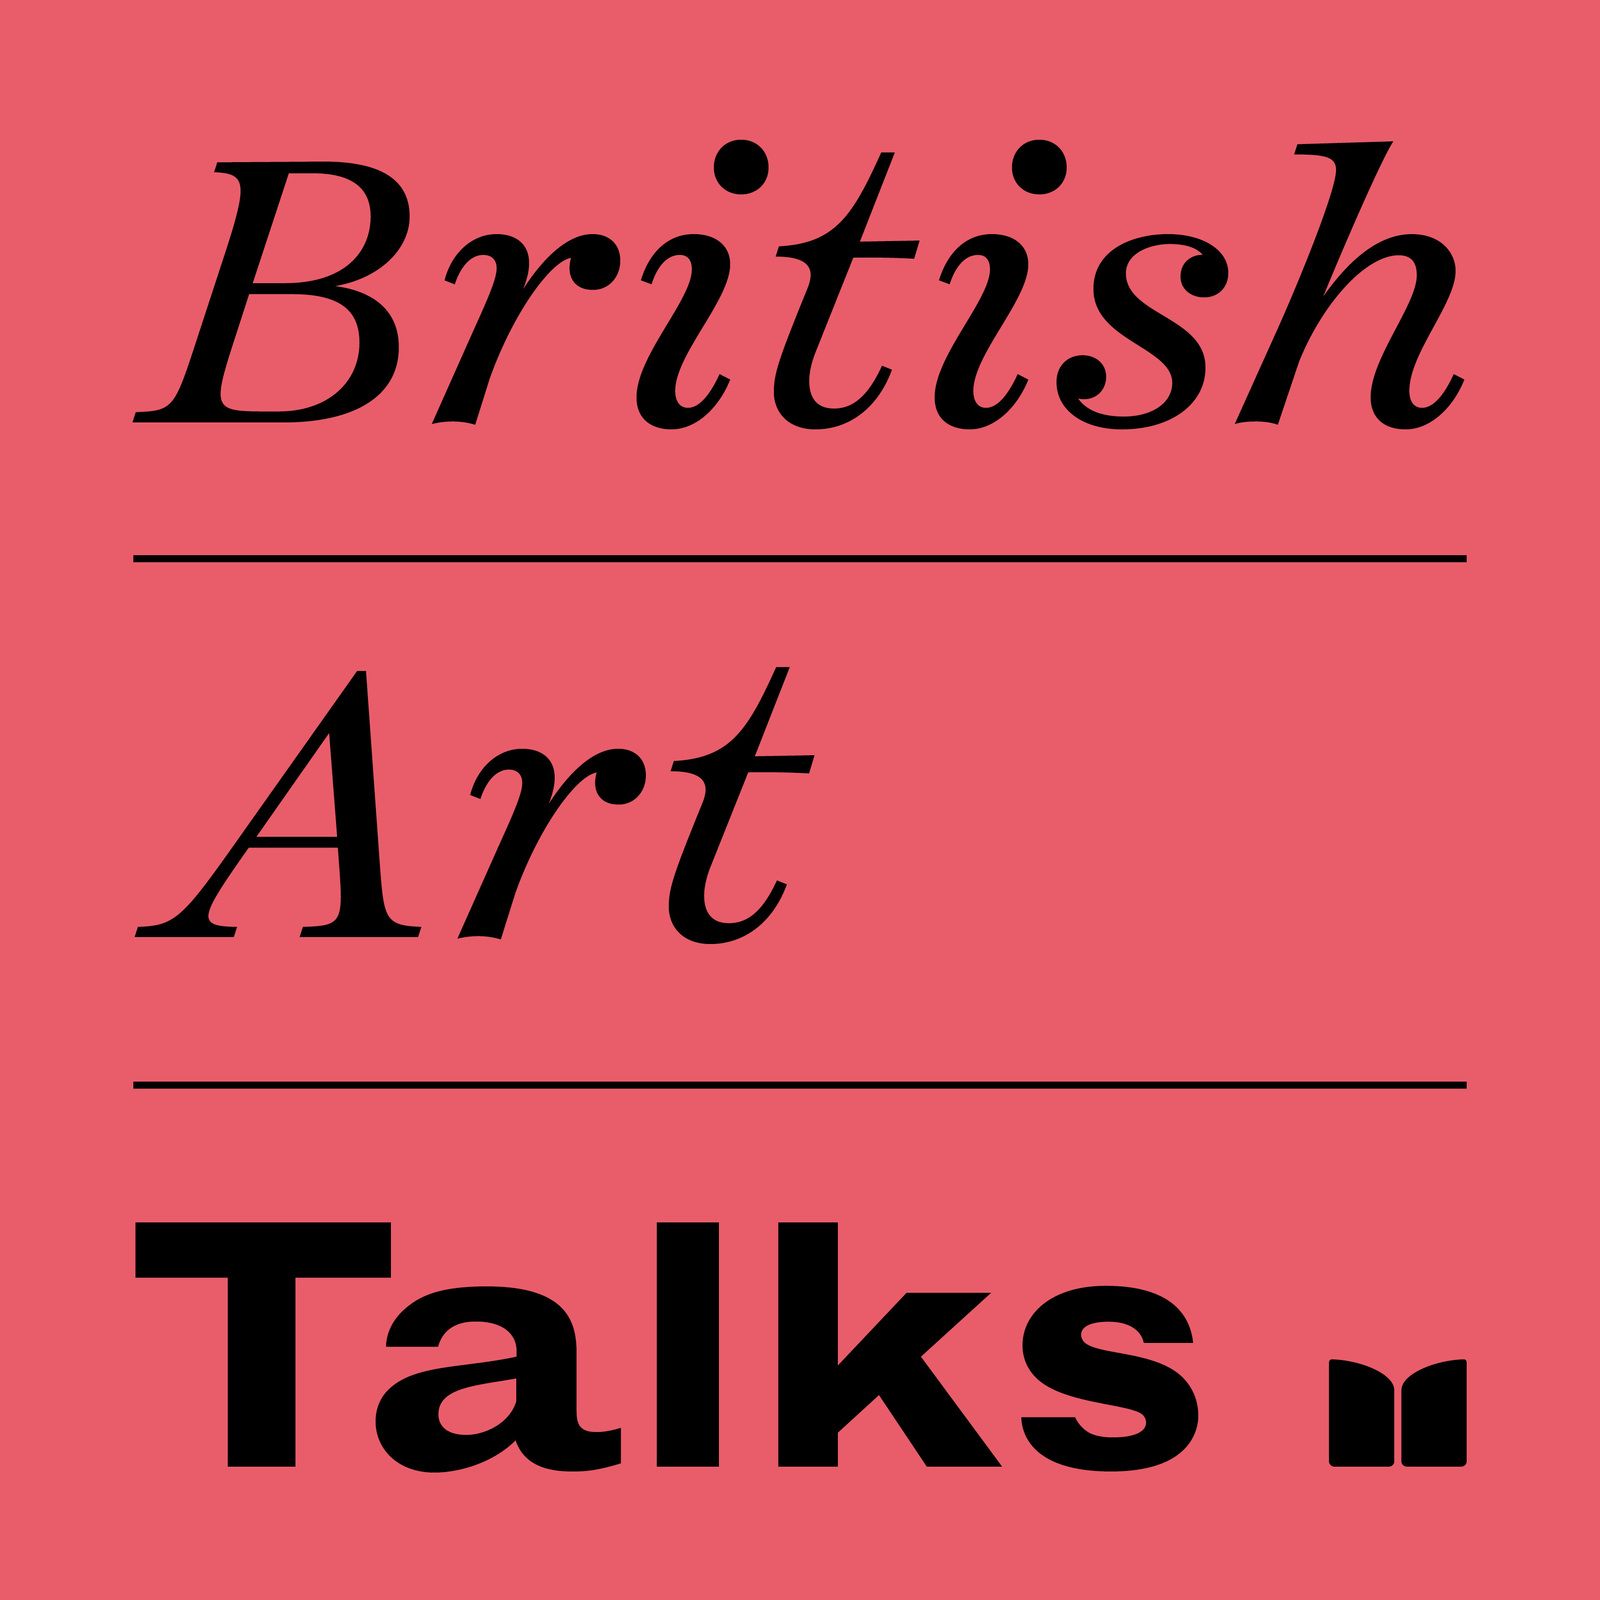 British Art Talks